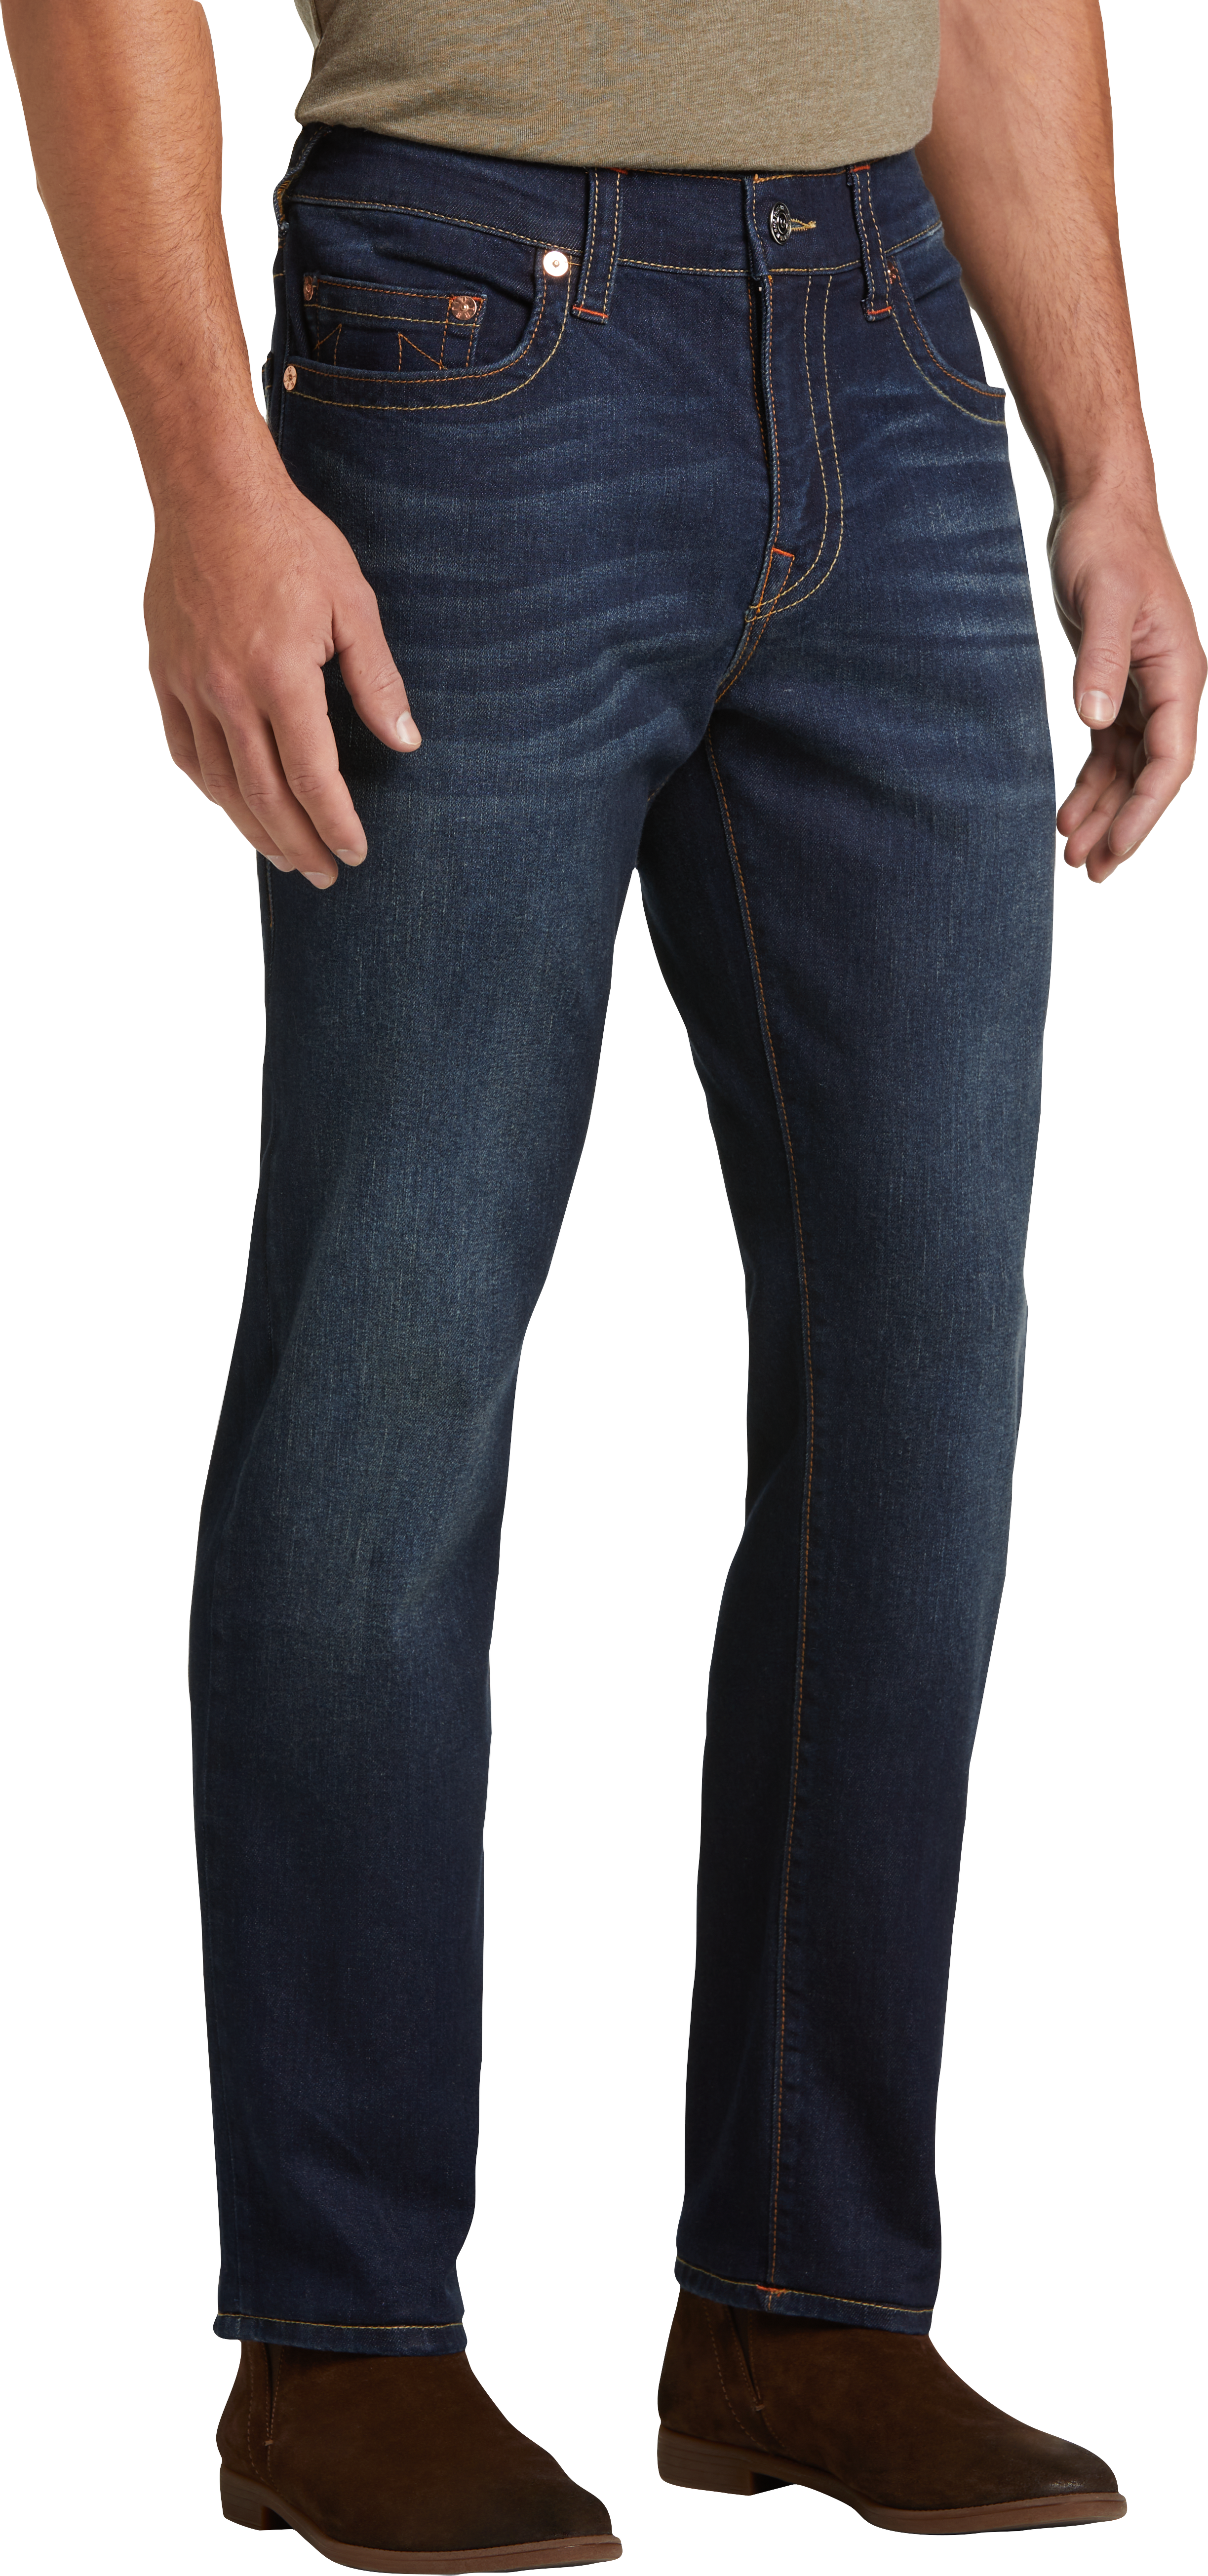 True Religion Geno Slim Fit Jeans only $4.97 | eDealinfo.com